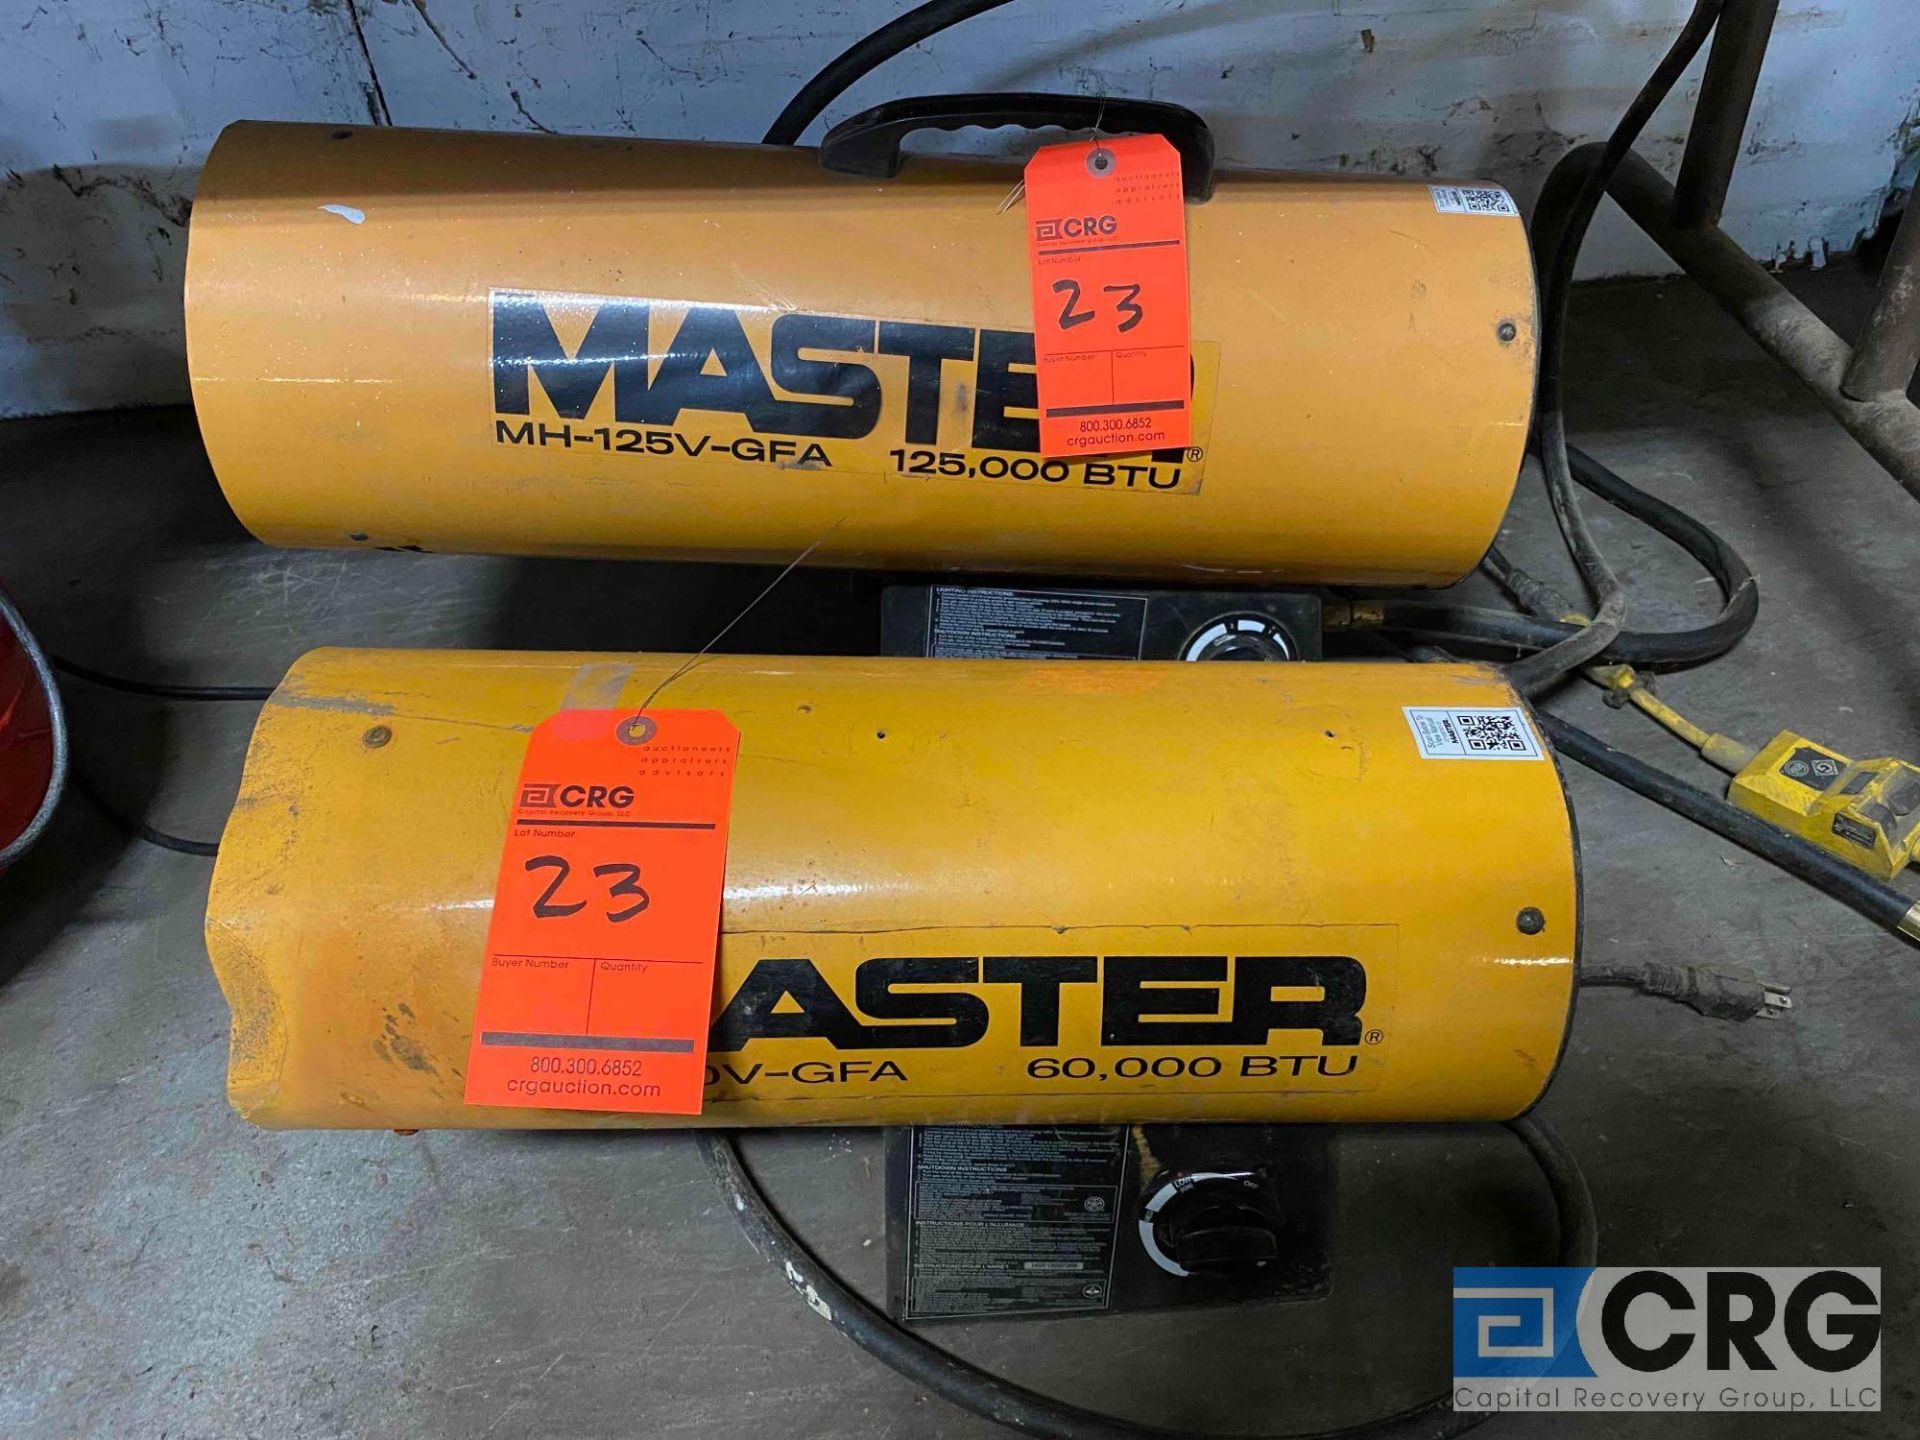 Lot of (2) Master torpedo heaters